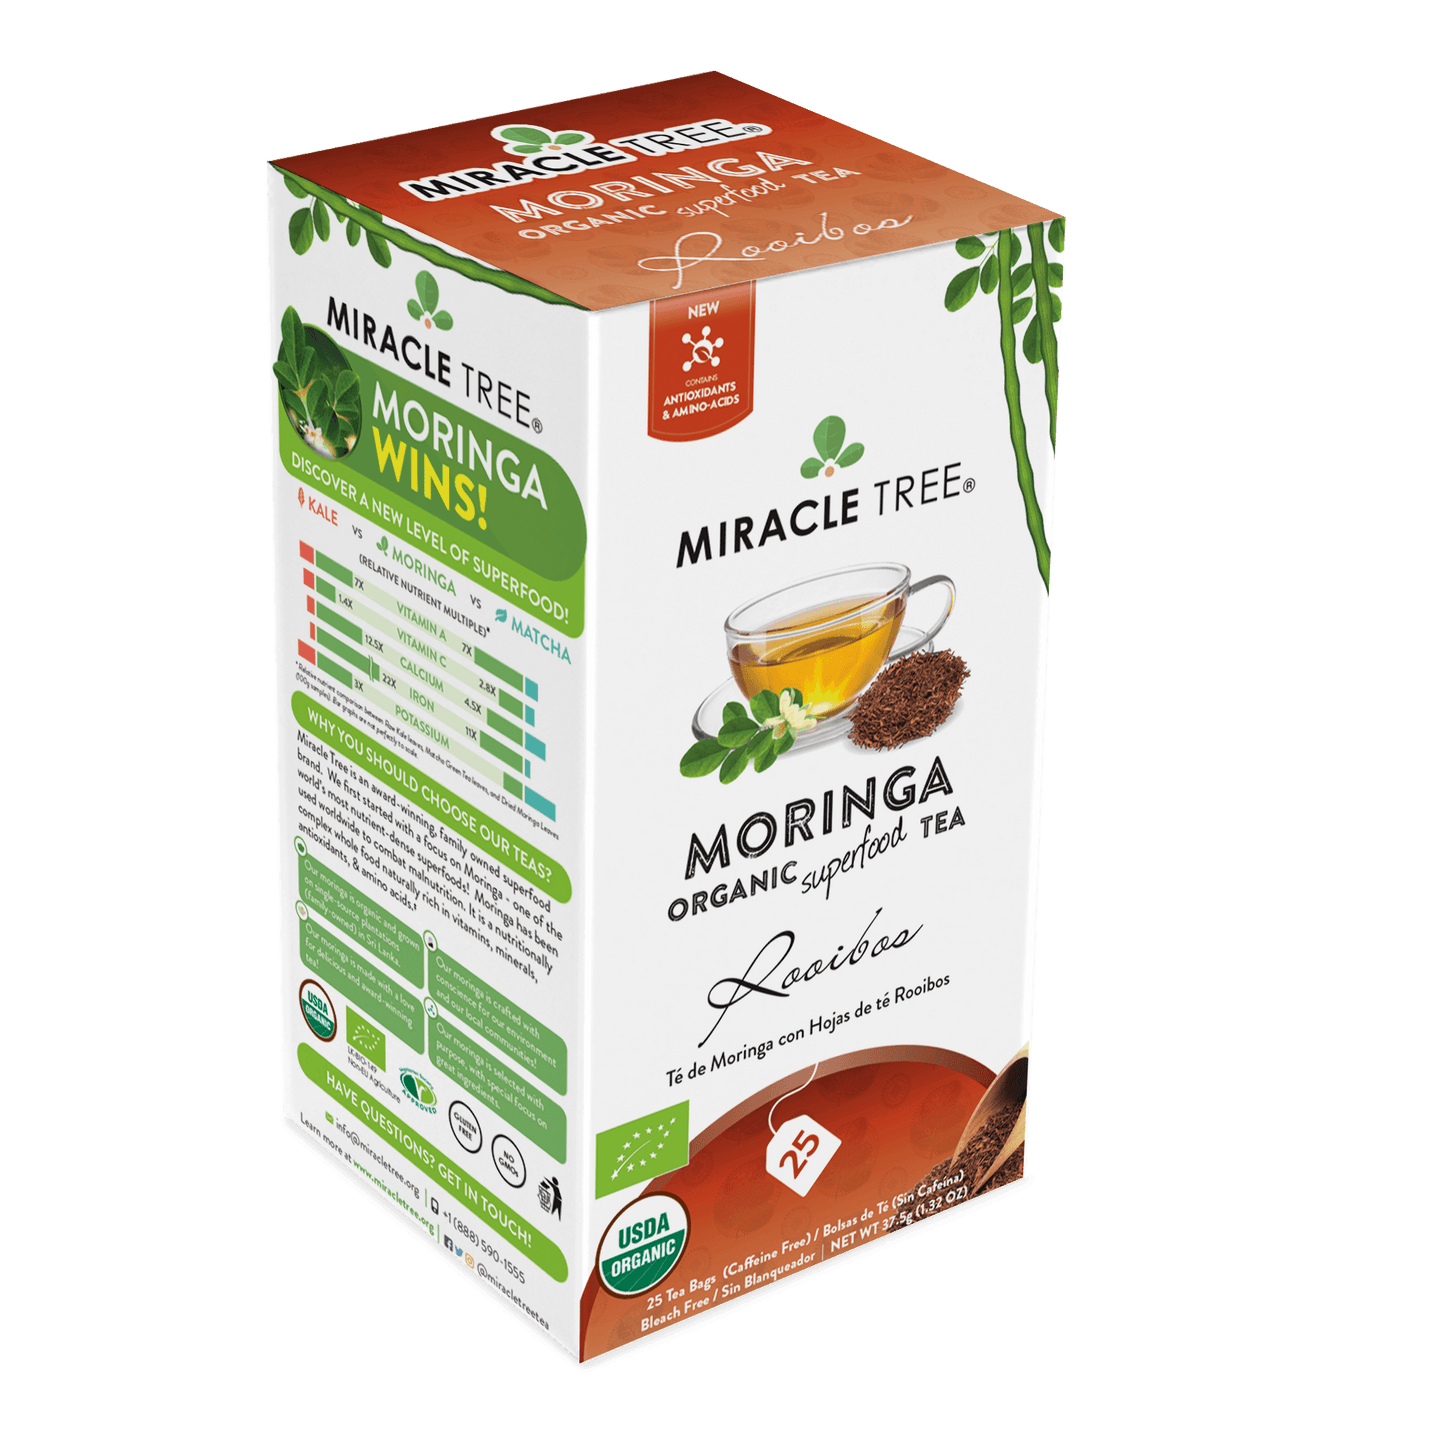 Miracle Tree's Organic Moringa Tea, Rooibos